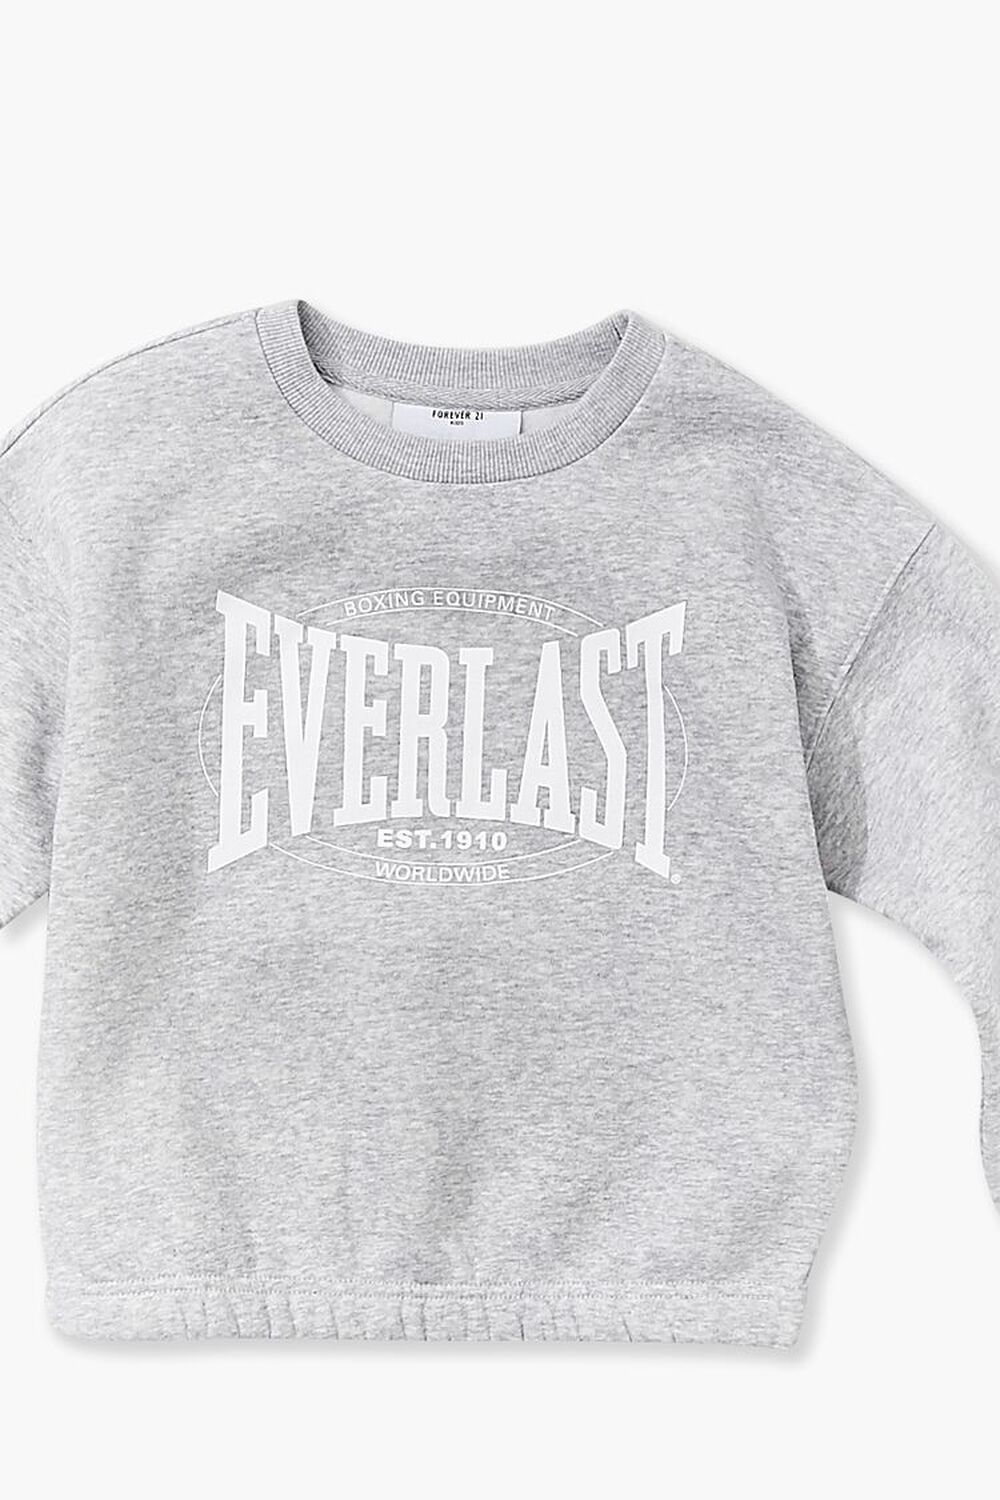 Girls Everlast Sweatshirt (Kids), image 3